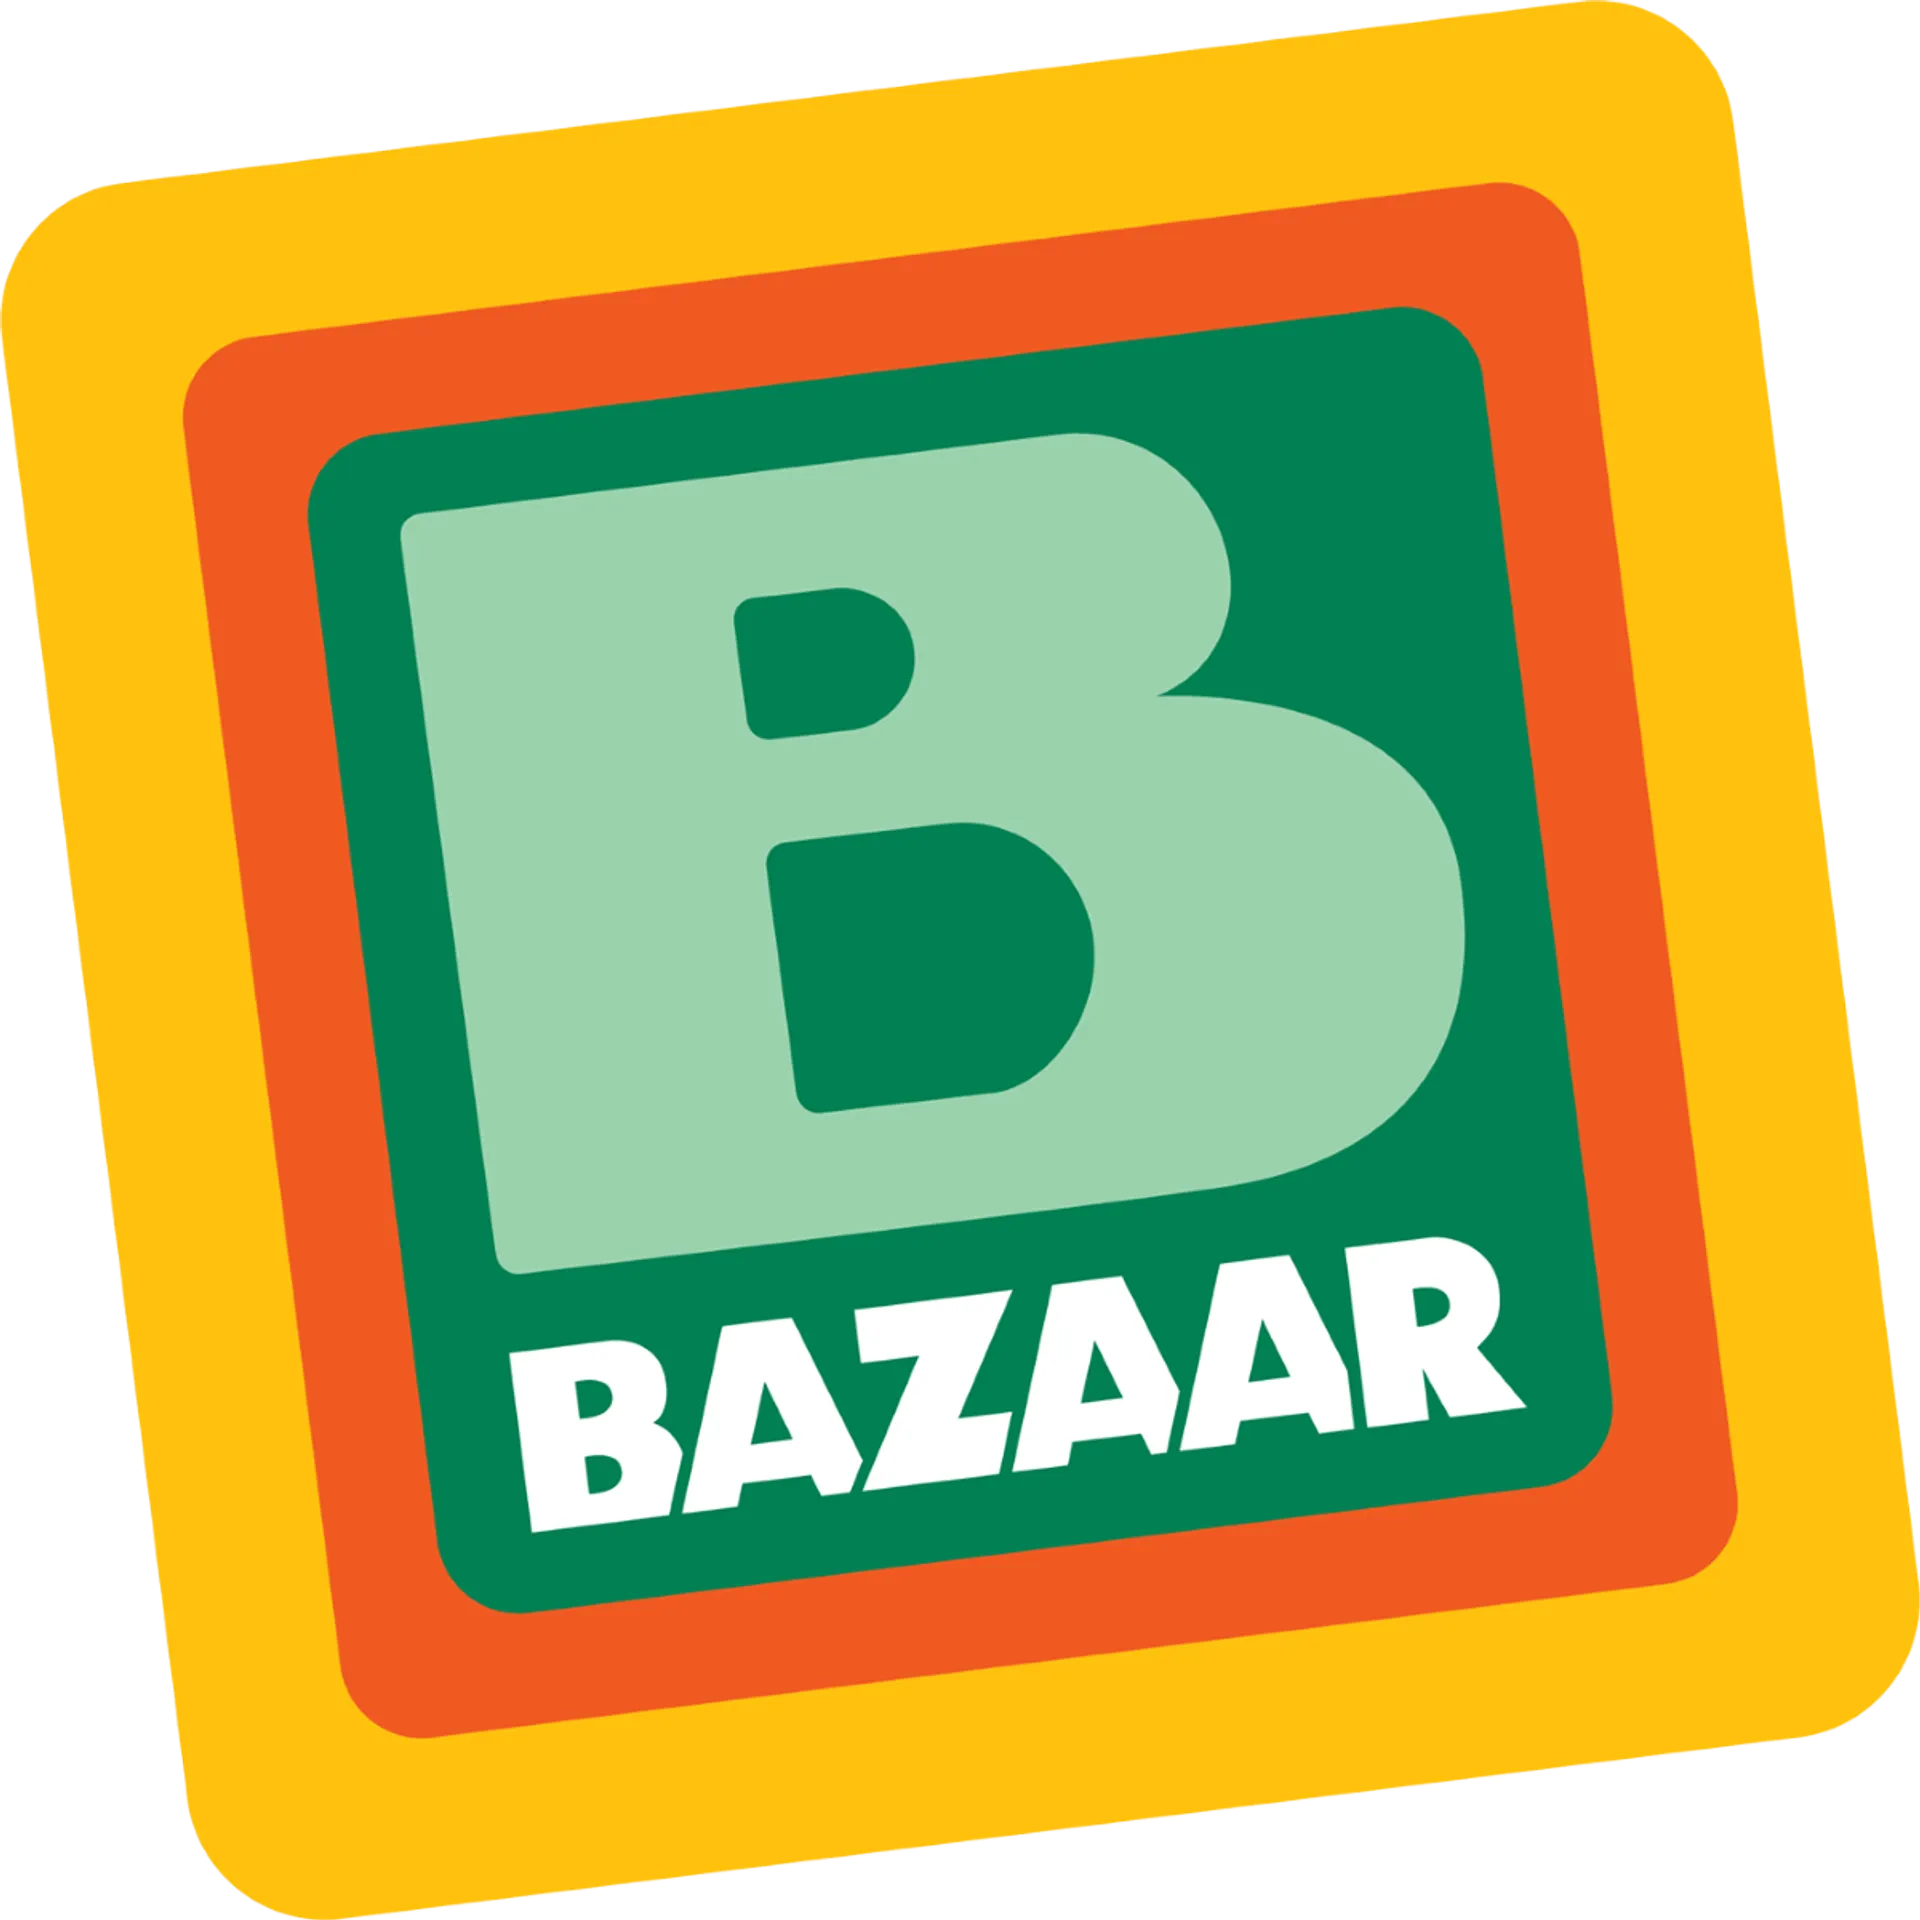 BAZAAR logo